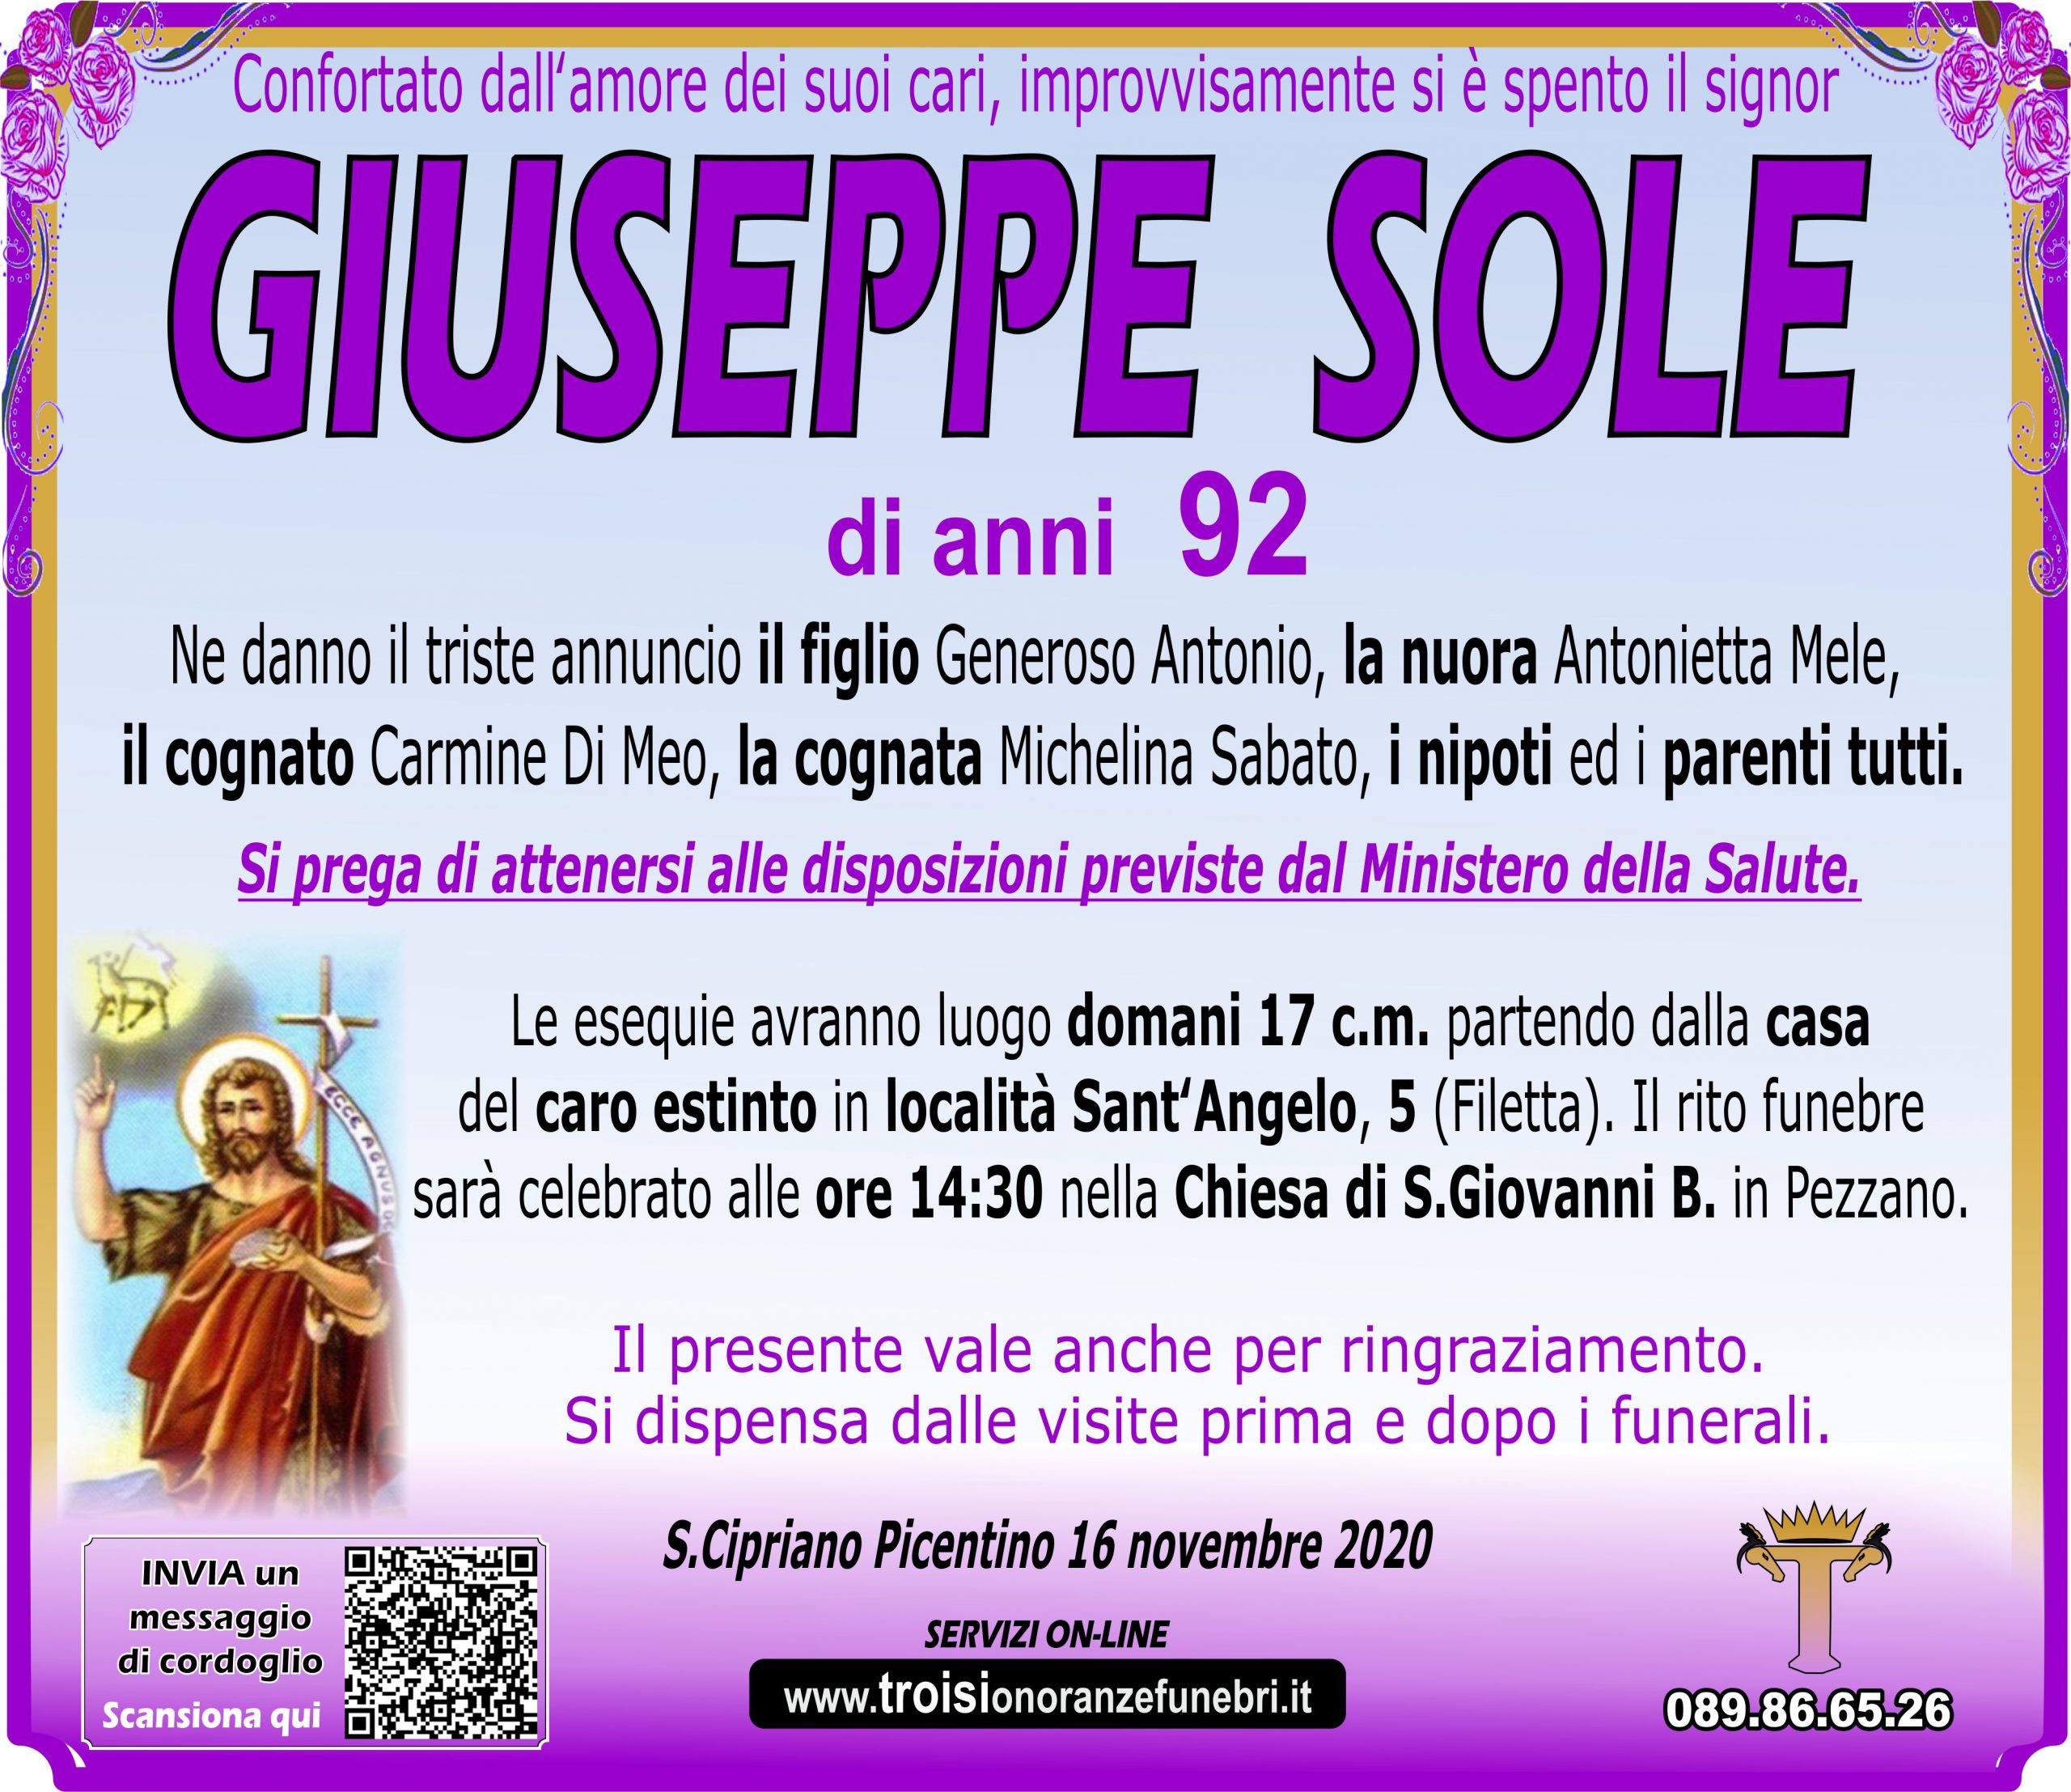 GIUSEPPE SOLE